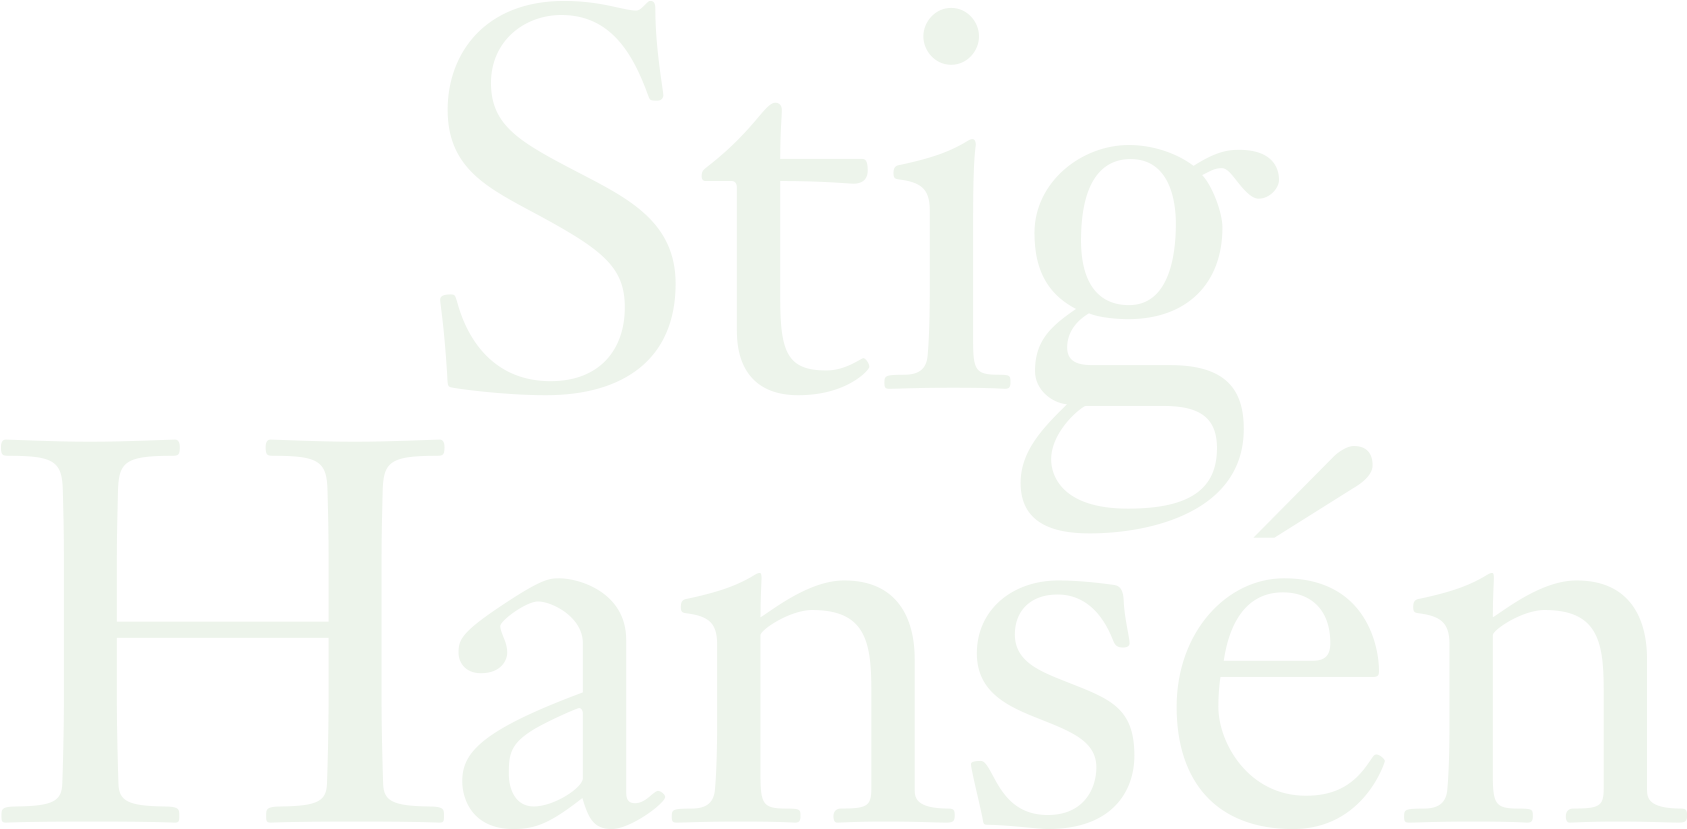 Stig Hansén Logo